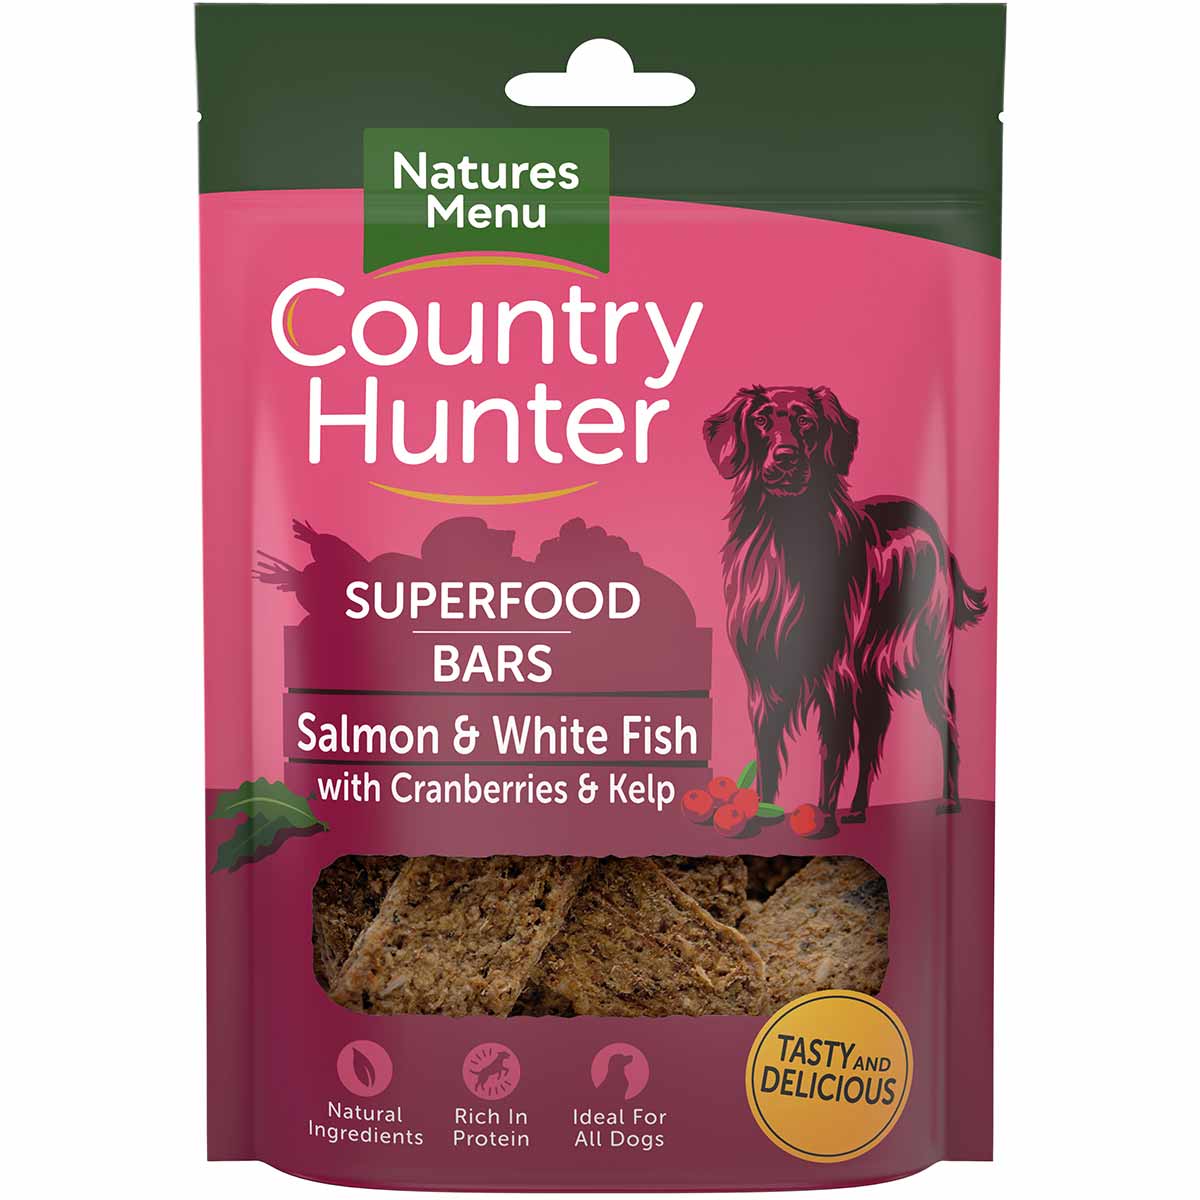 Natures Menu Country Hunter Superfood Bars Salmon and White Fish Dog Treat